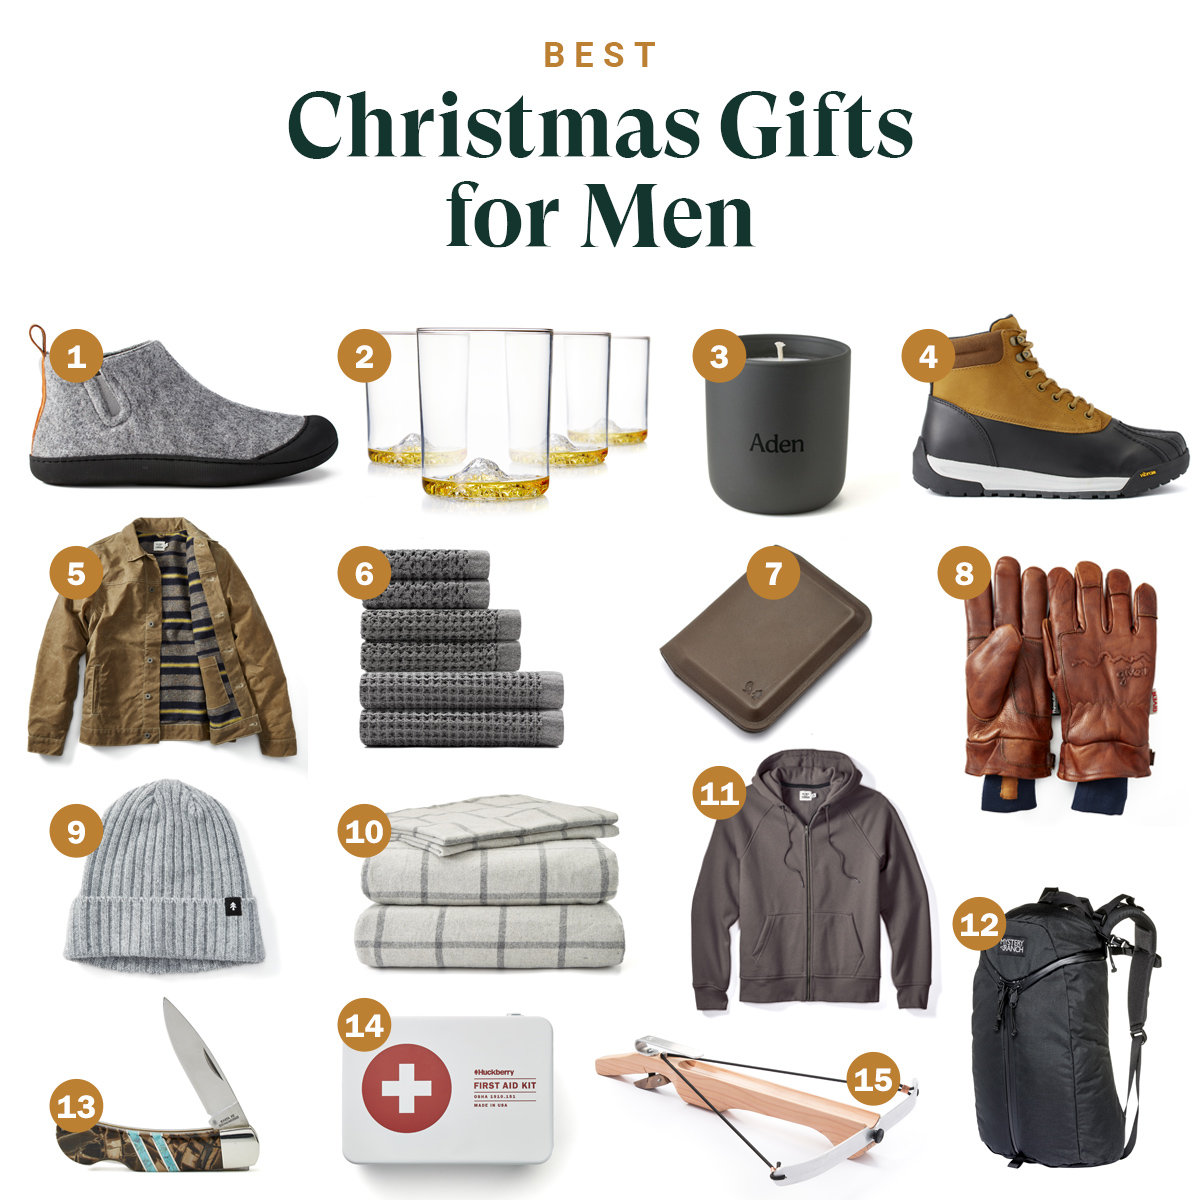 Top 15 Gift Ideas for Men [2020]